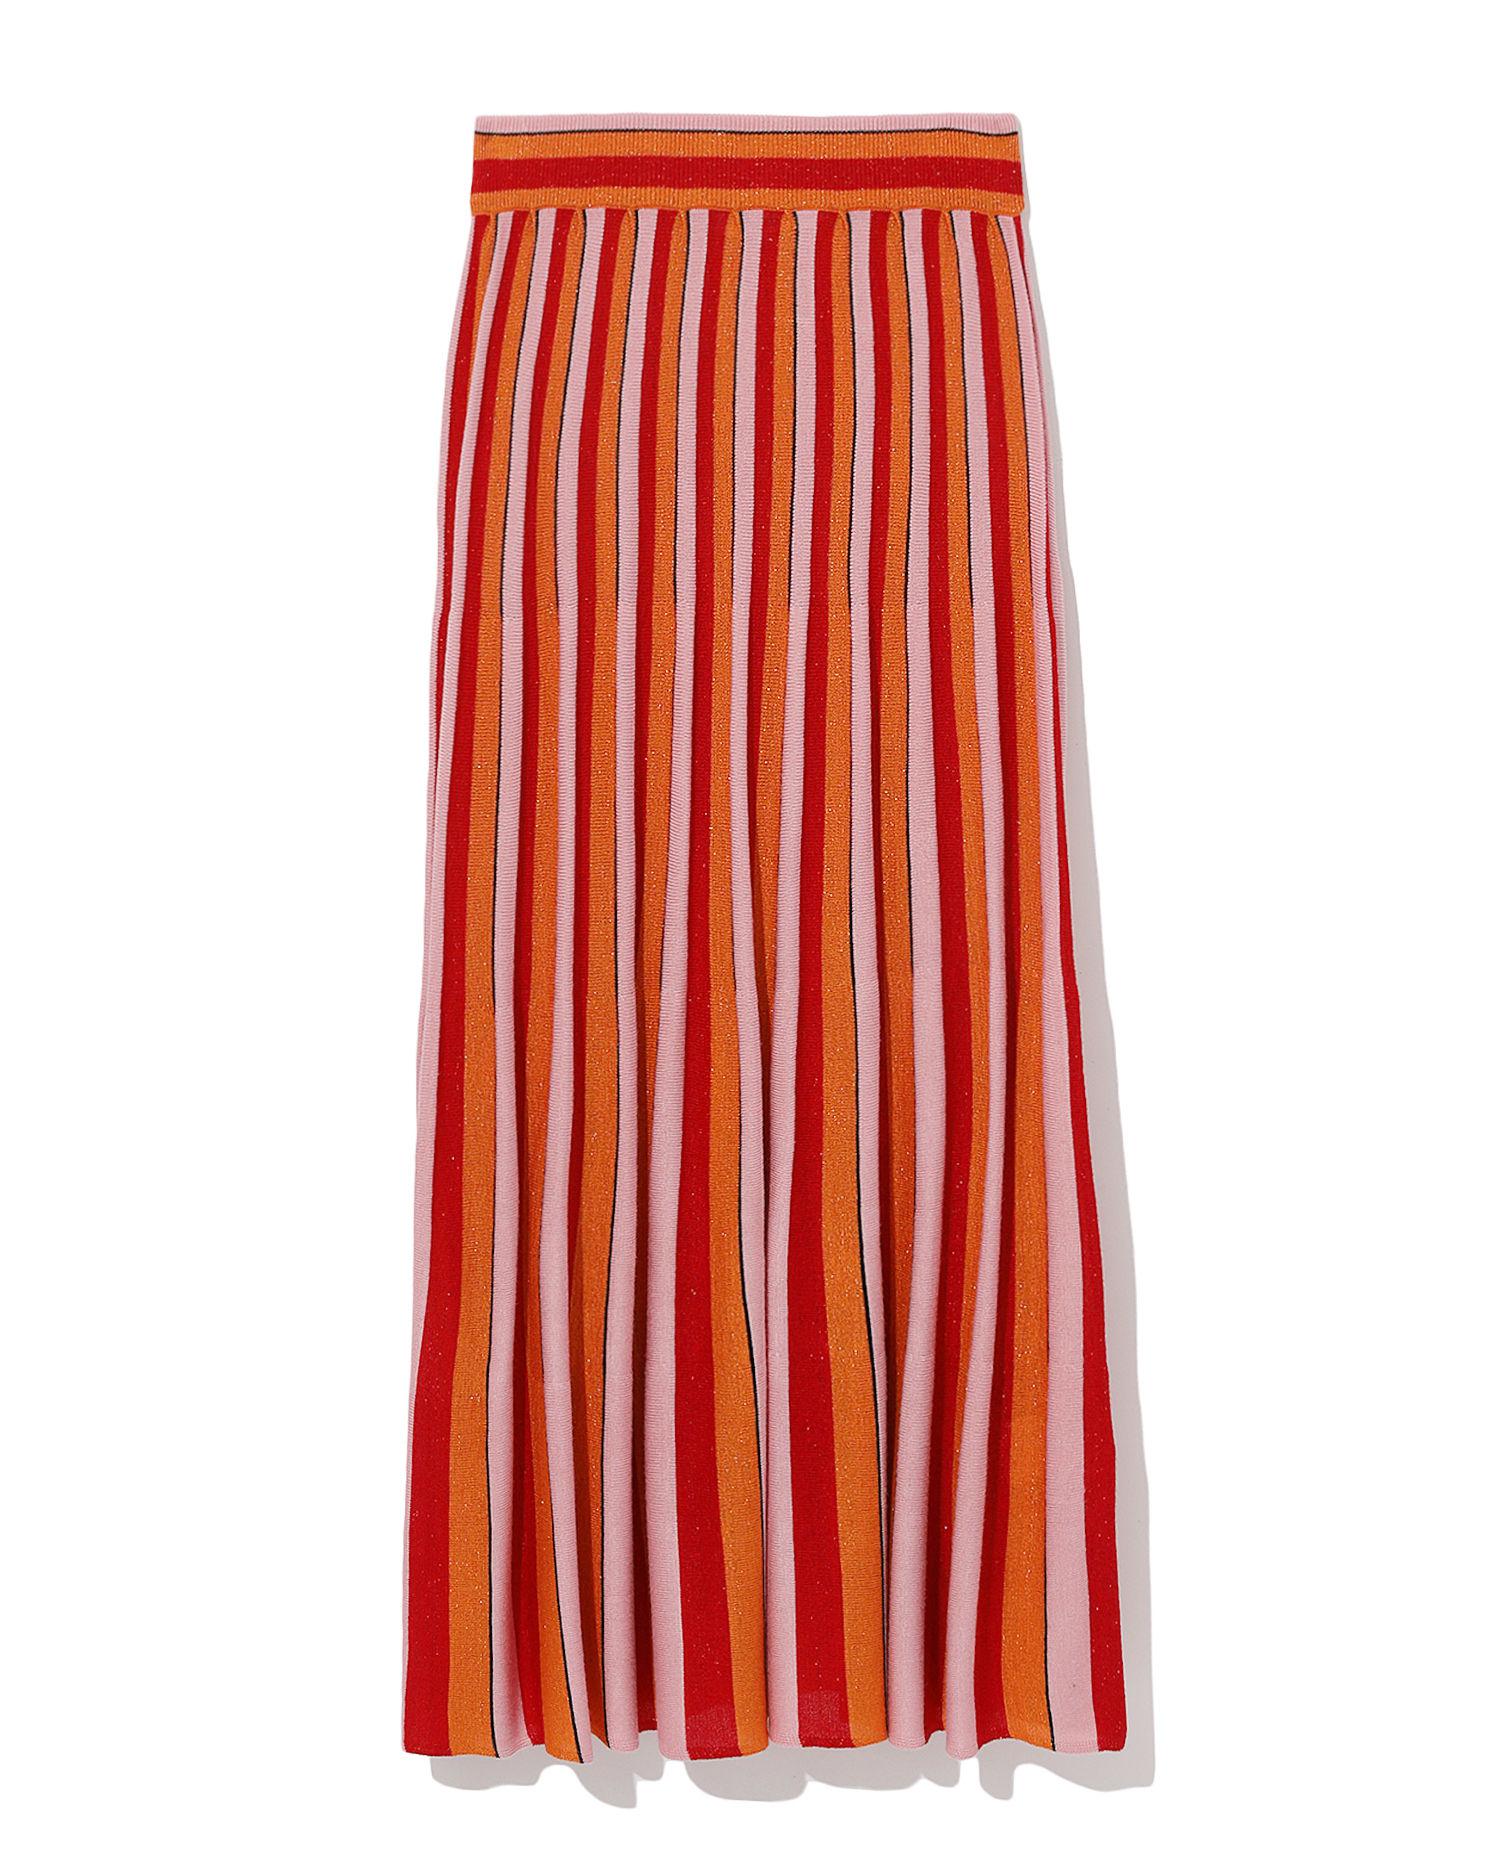 Stripe knit skirt by B+AB